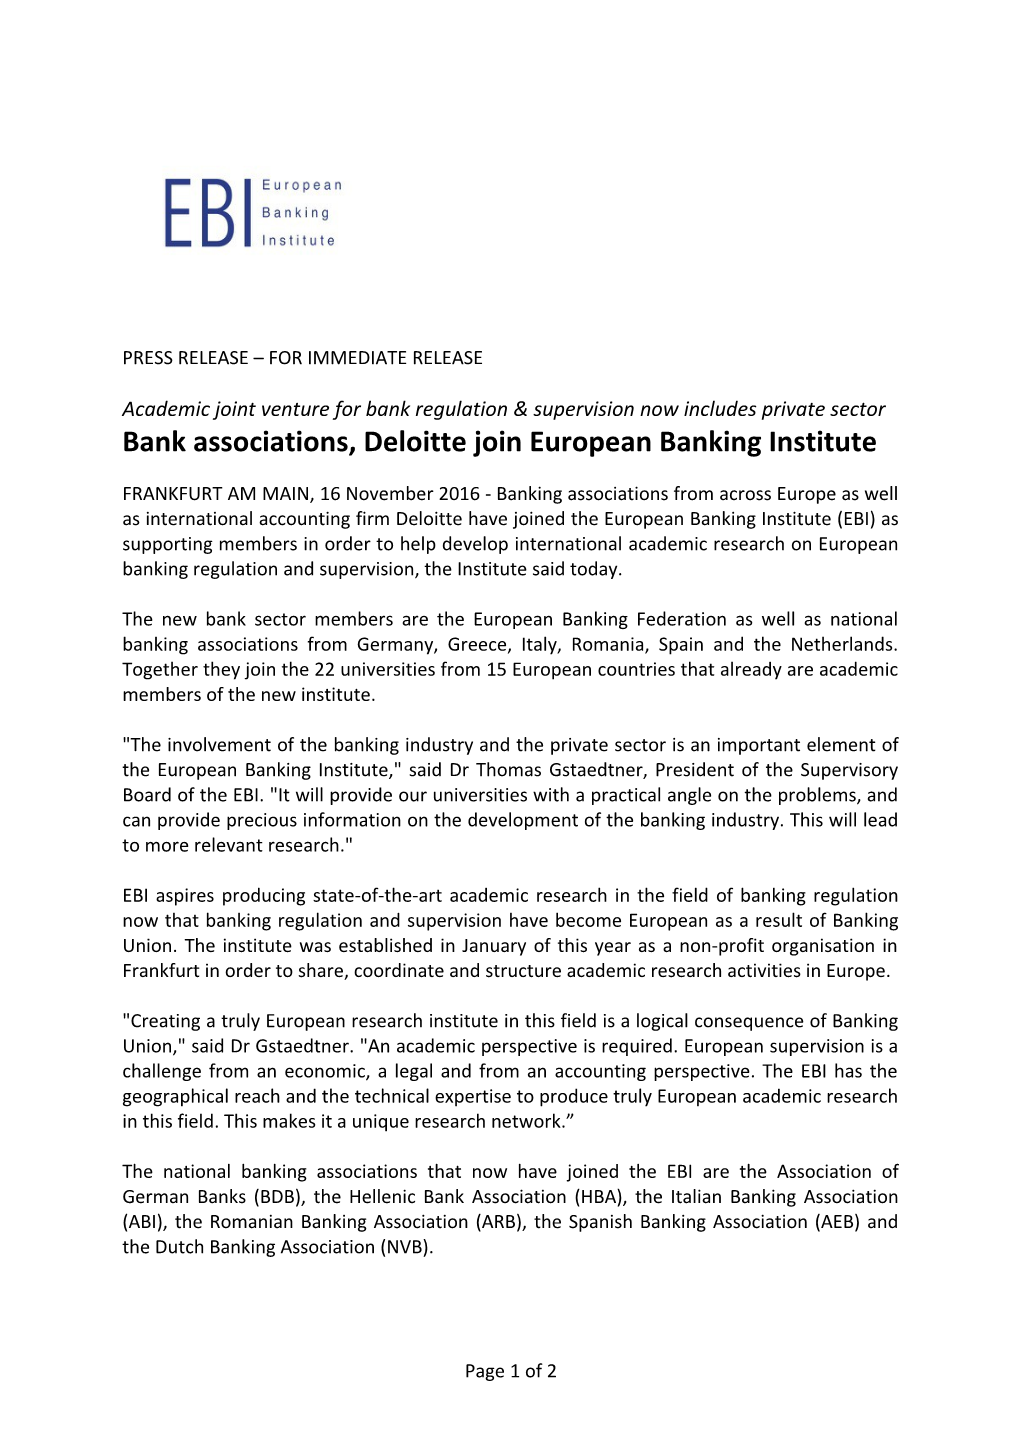 Bank Associations, Deloitte Join European Banking Institute